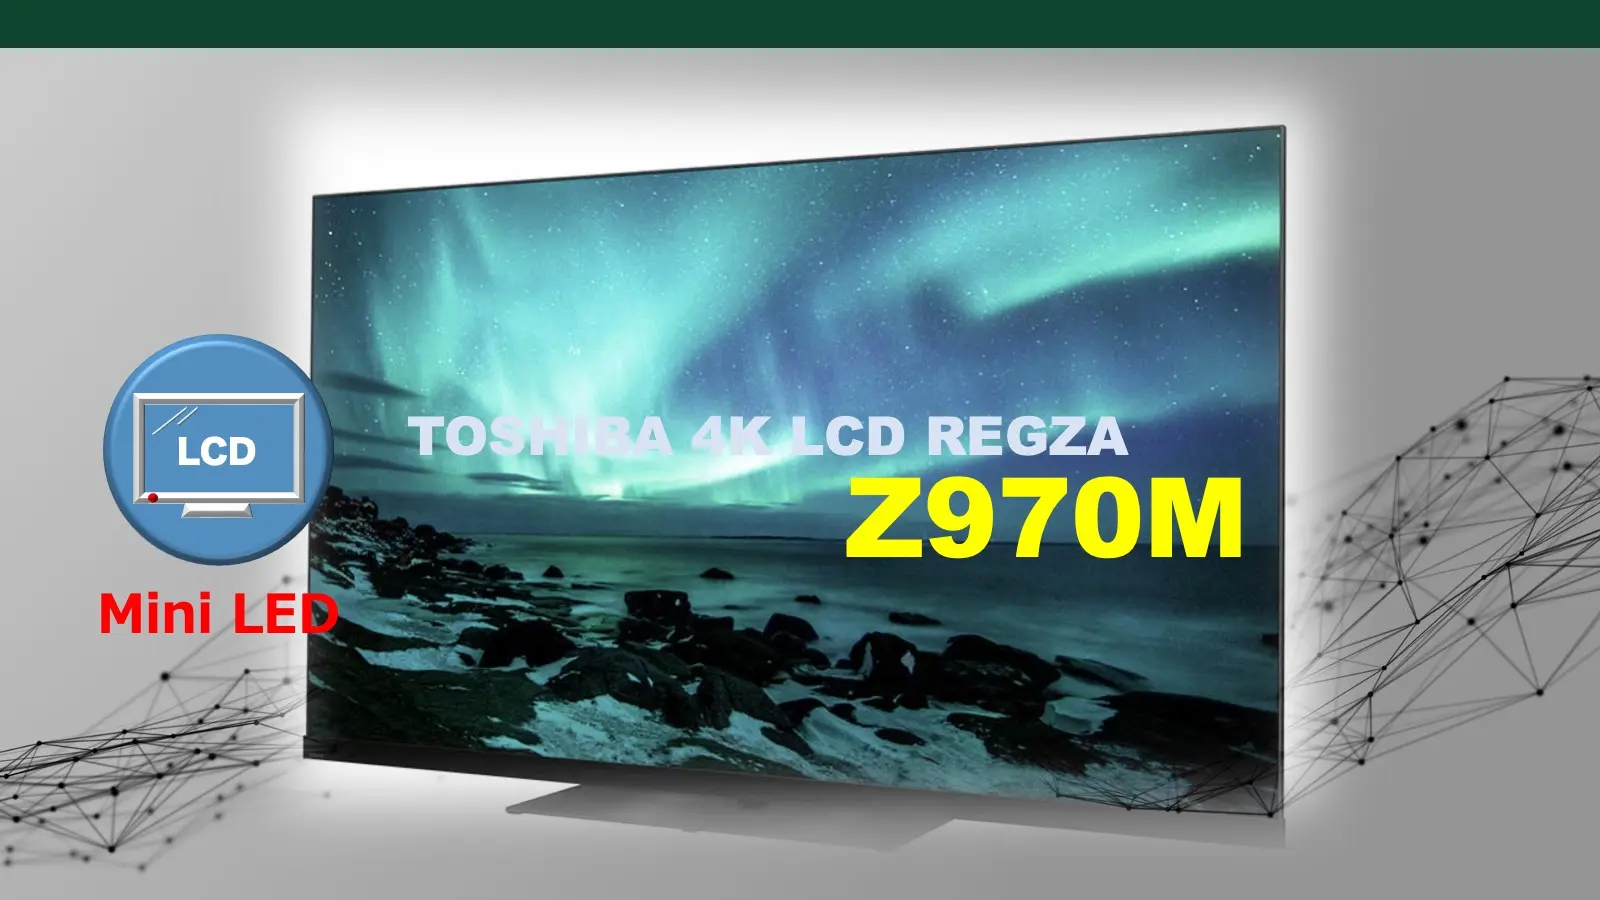 TVS REGZA(旧東芝) 4K Mini LED 液晶レグザ Z970Mレビュー記事用のオリジナルアイキャッチ画像